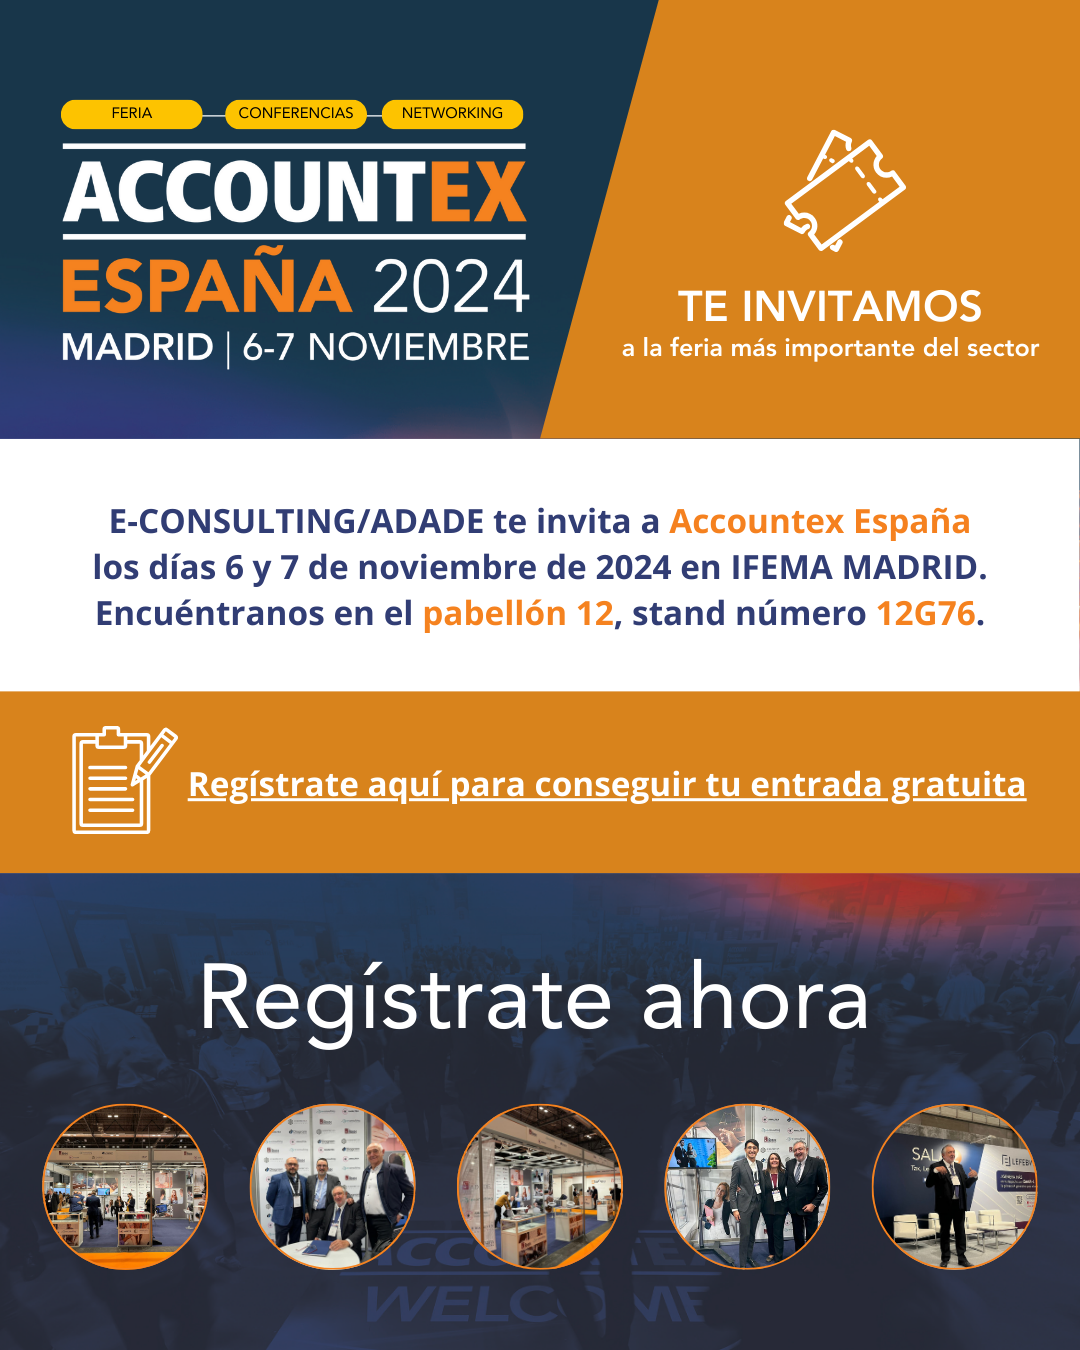 ACCOUNTEX ESPAÑA 2024 | MADRID | 6-7 Noviembre | Te invitamos a la feria mas importante del sector | E-Consulting/Adade te invita a Accountex España